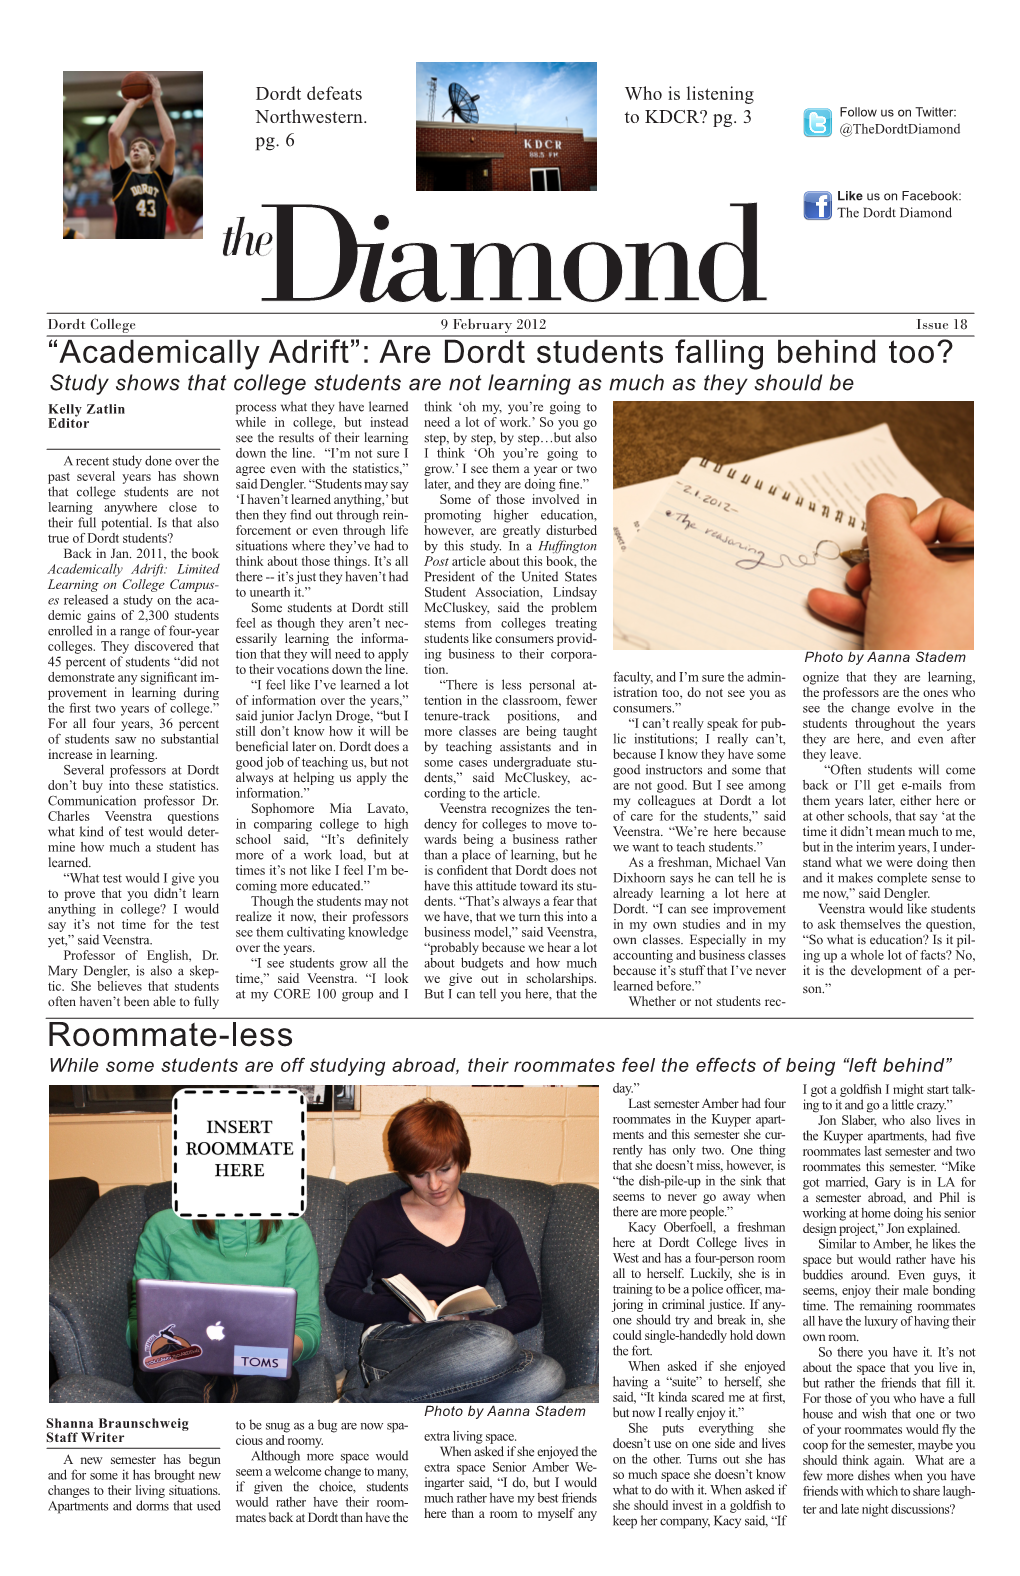 The Diamond, February 9, 2012